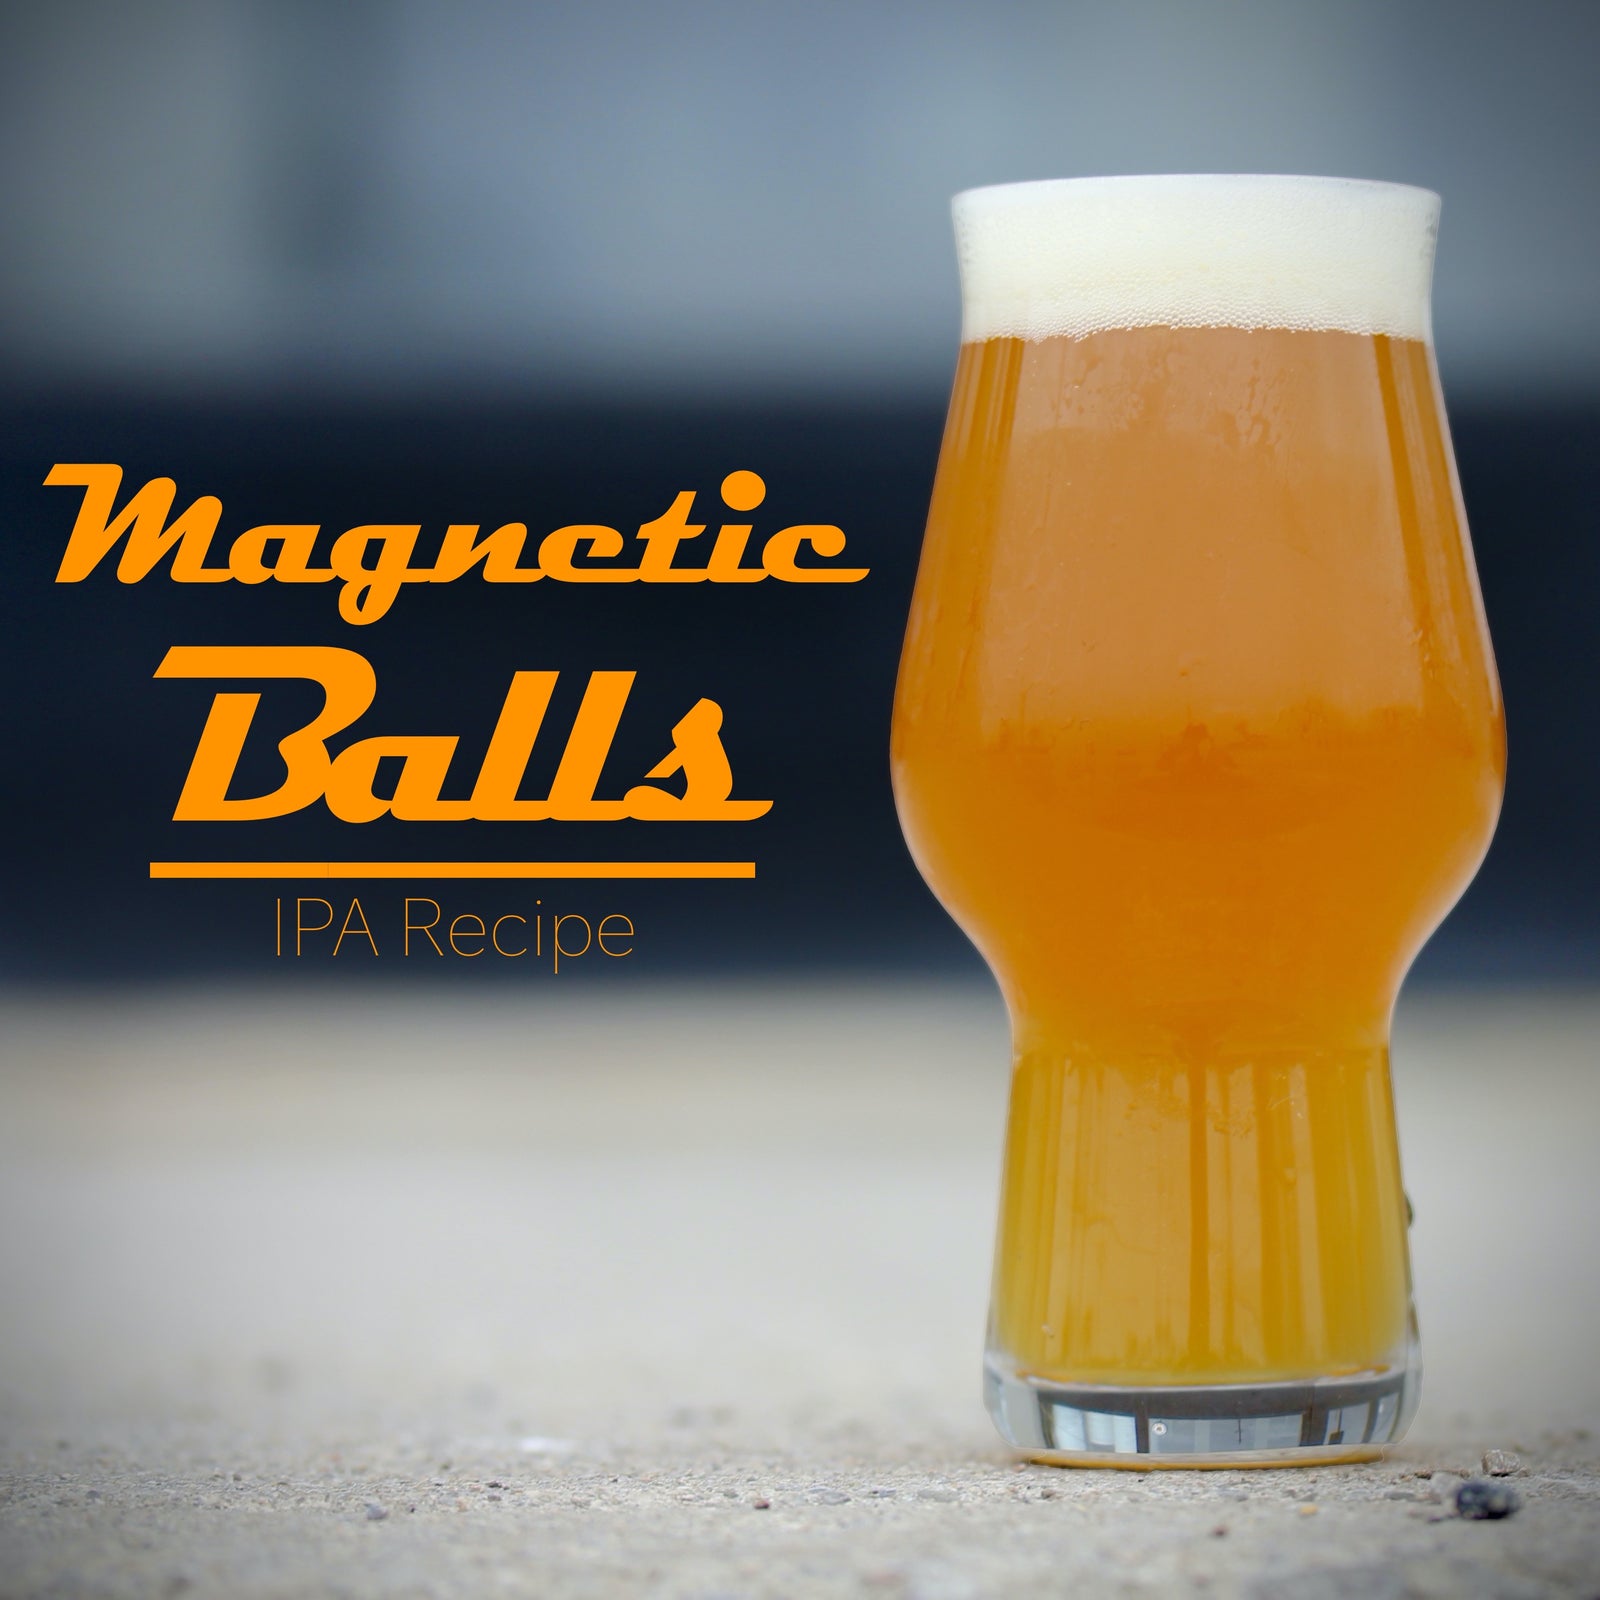 Magnetic Balls - IPA Recipe